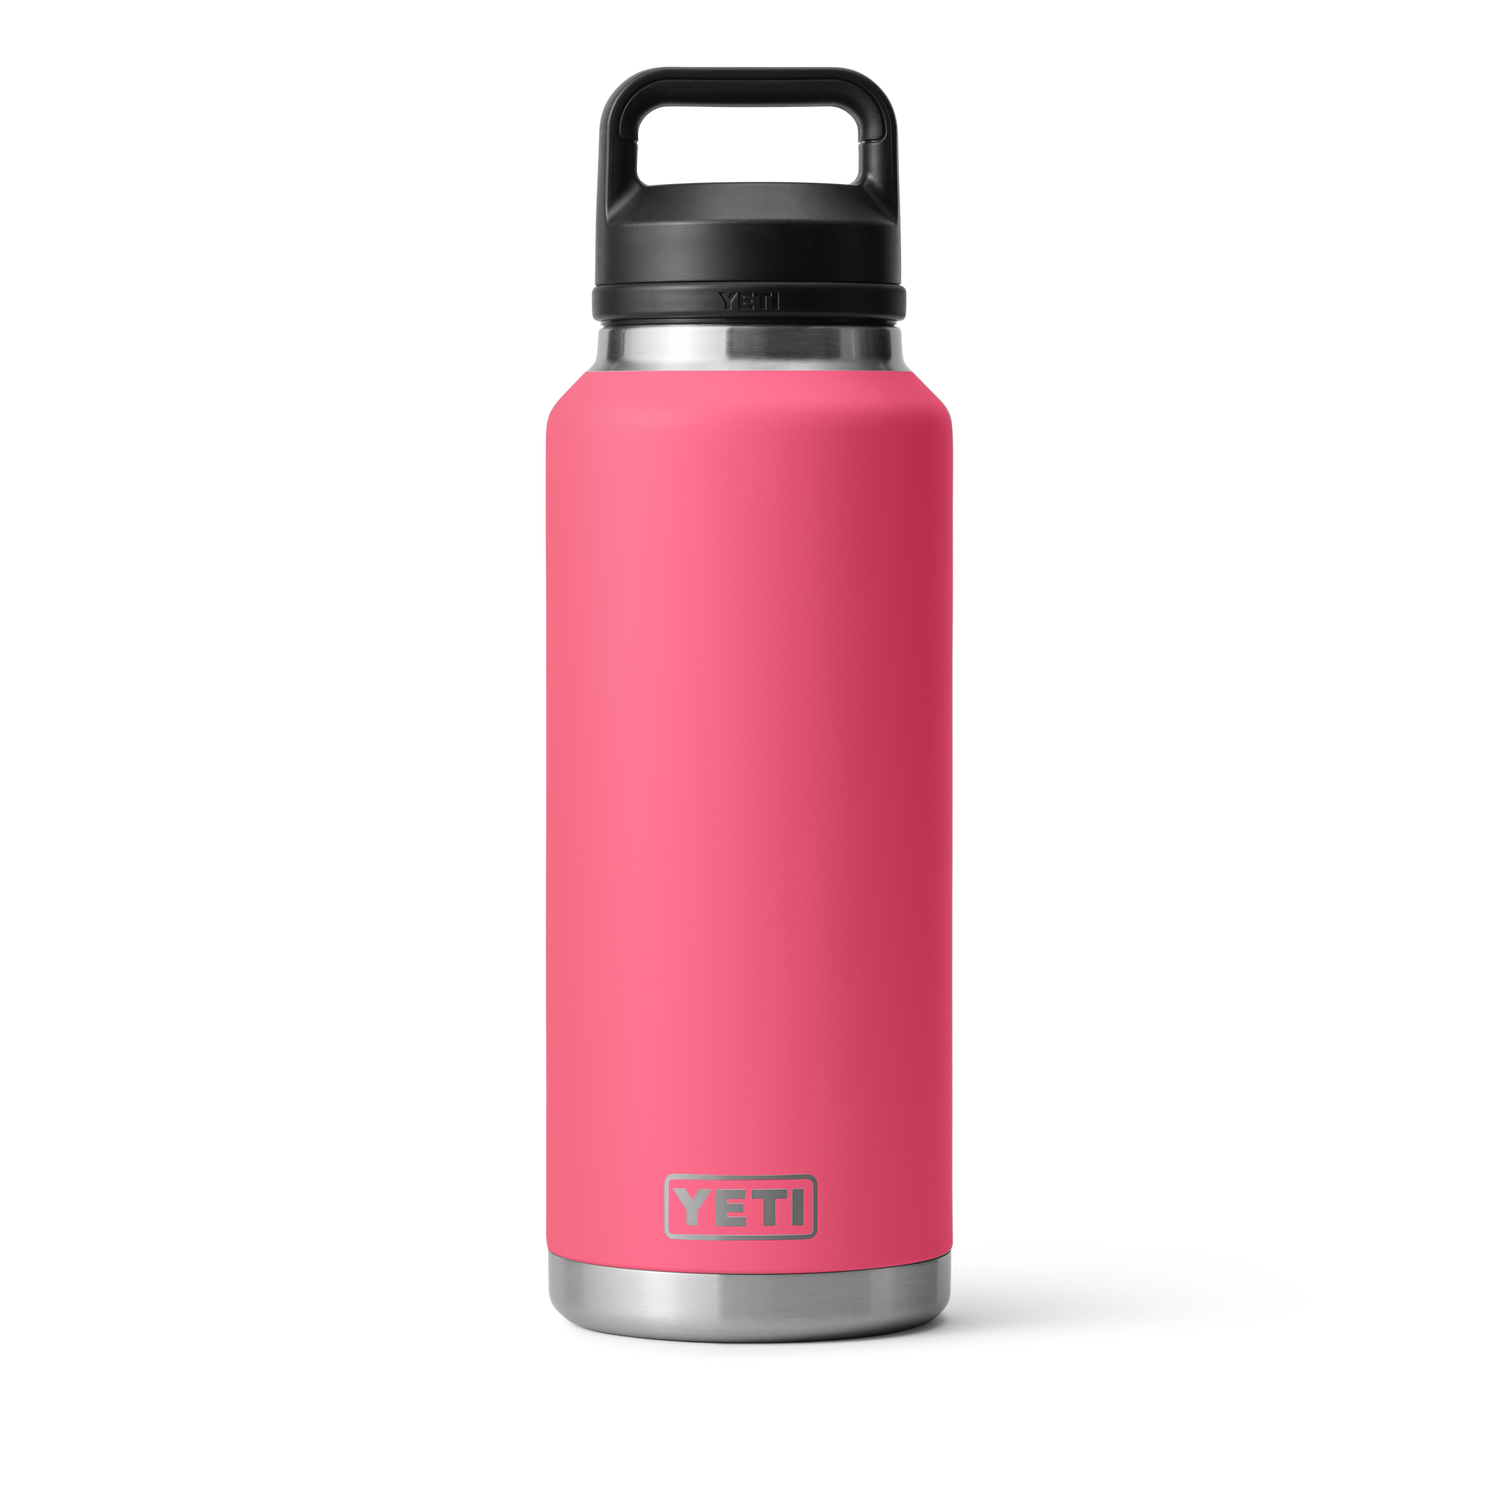 Yeti Rambler 46oz Bottle Chug Tropical Pink